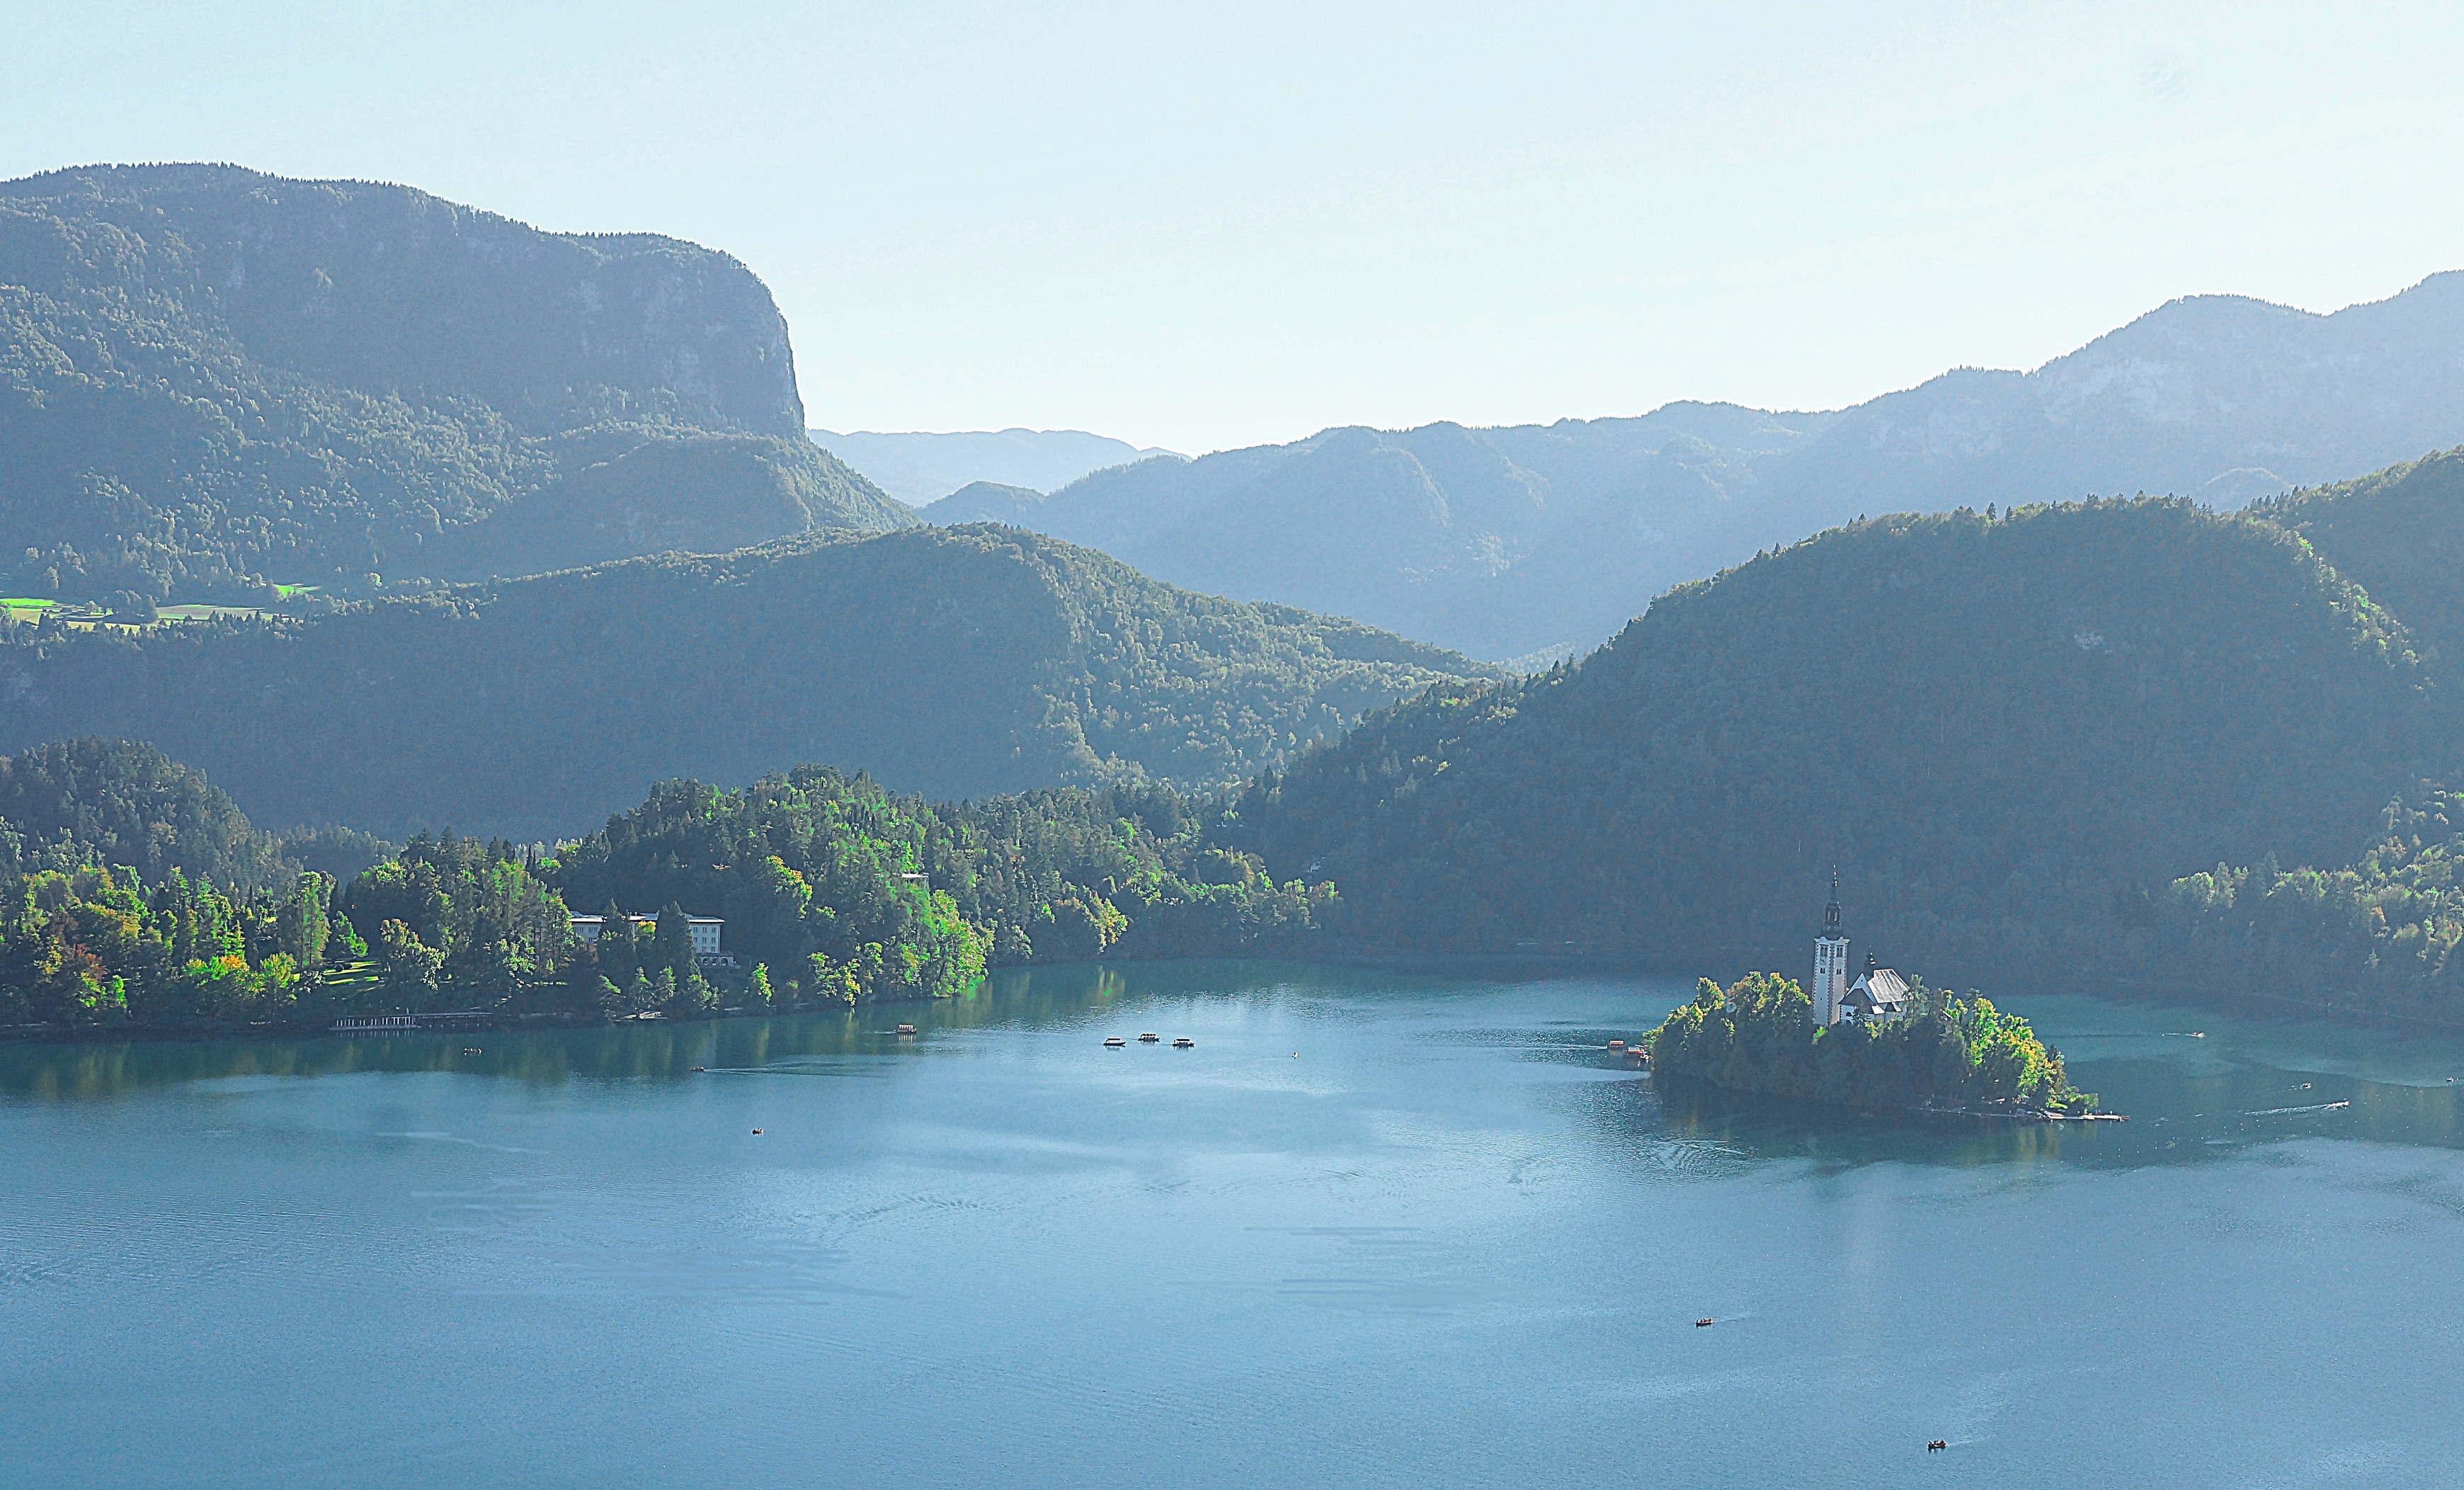 Озеро Блед в Словении с островком с церковью. Фото Морошкина В.В.